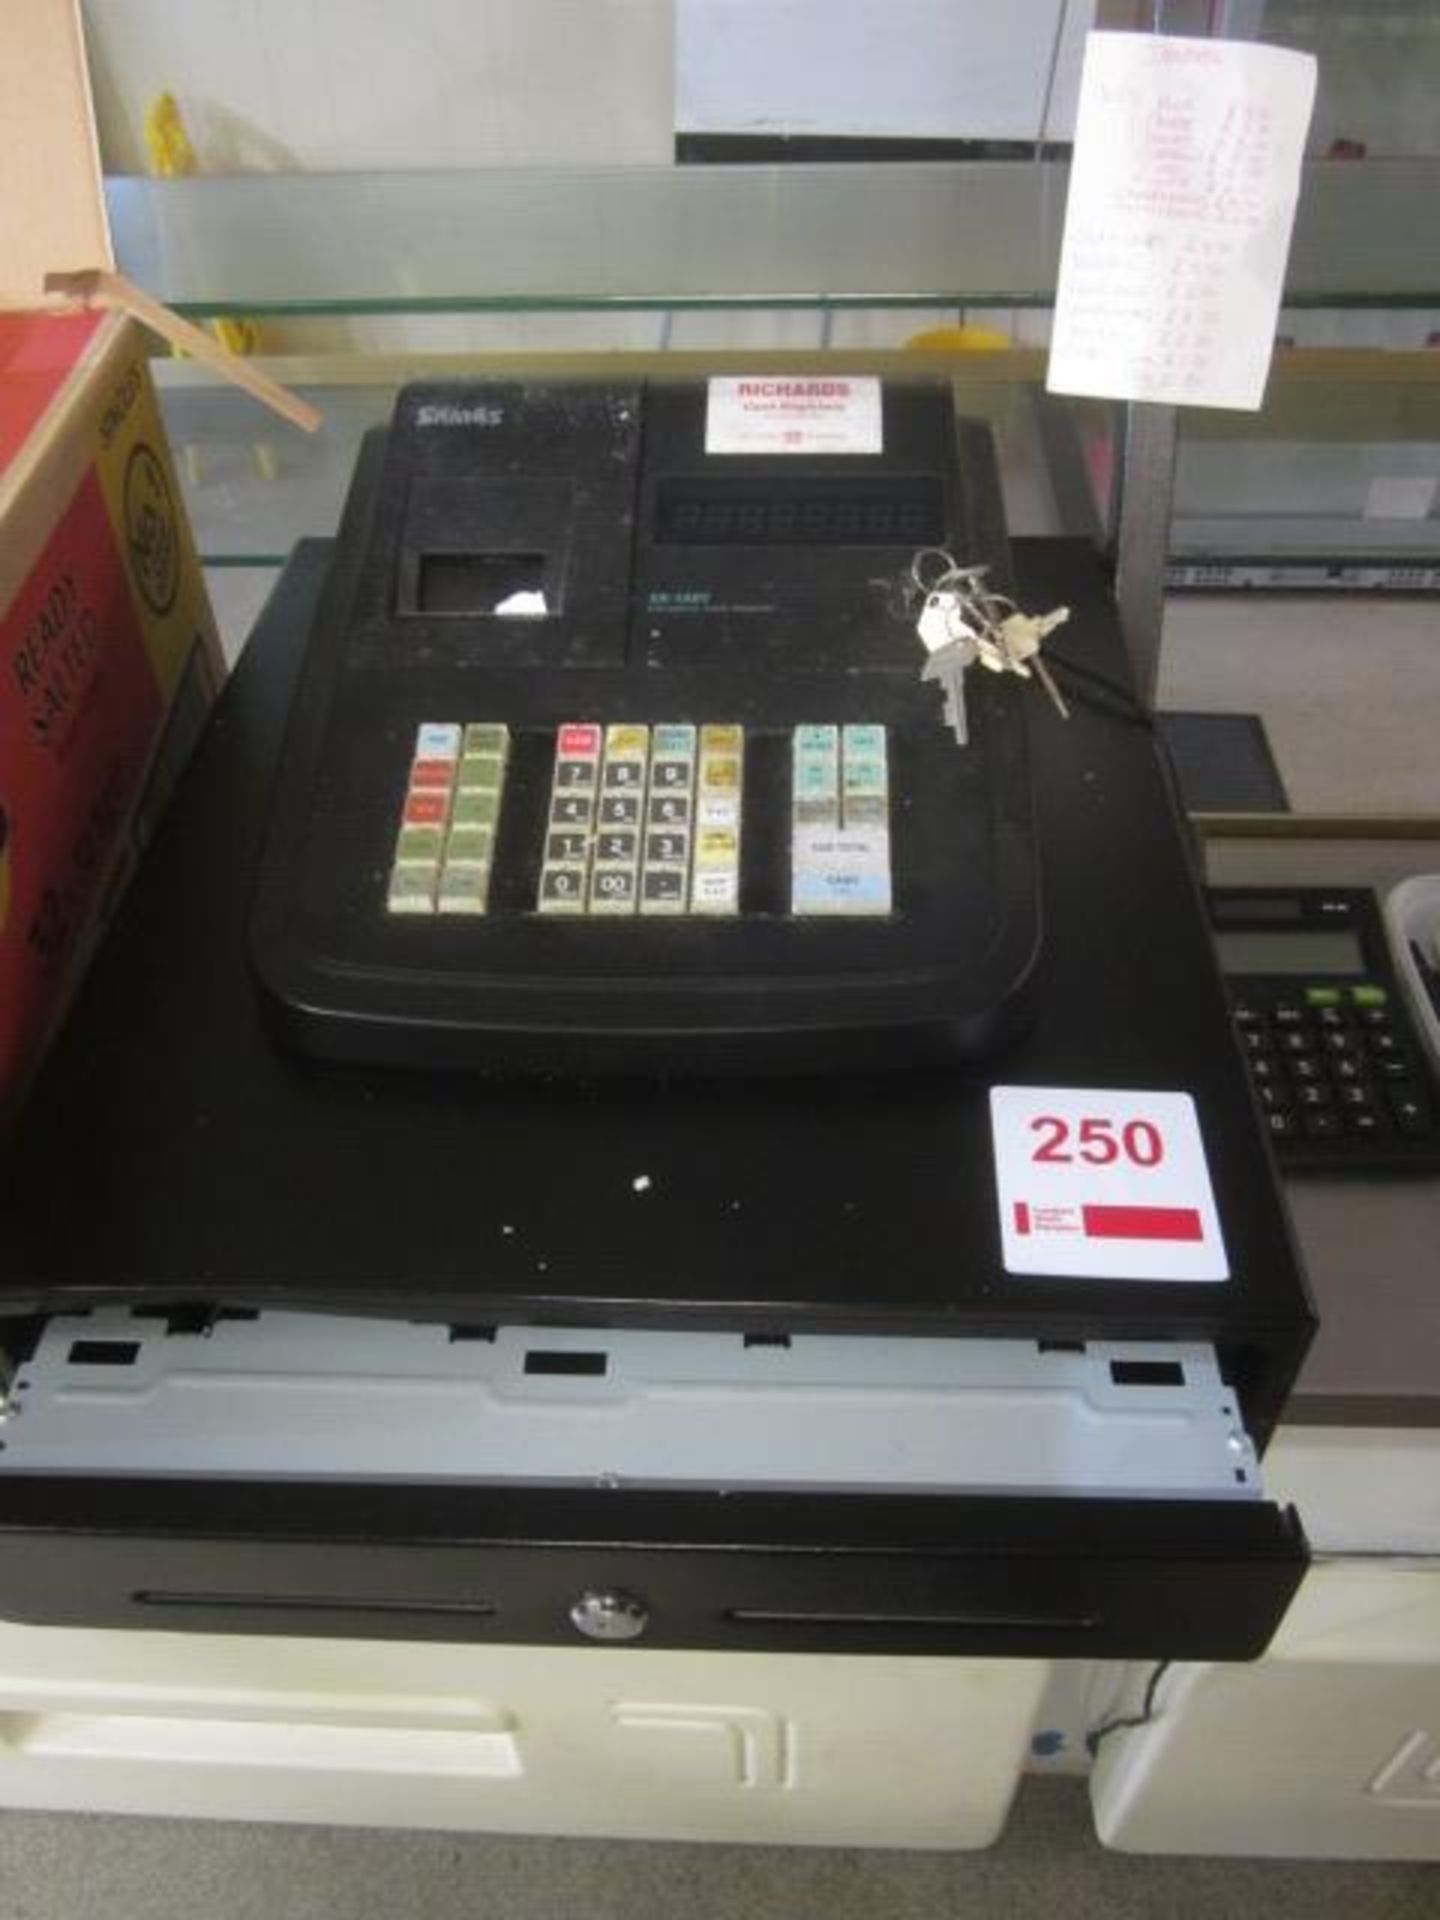 SAM4S ER-180T electronic cash register **Located: Puddy Mark Café, High Street, Street, Somerset,